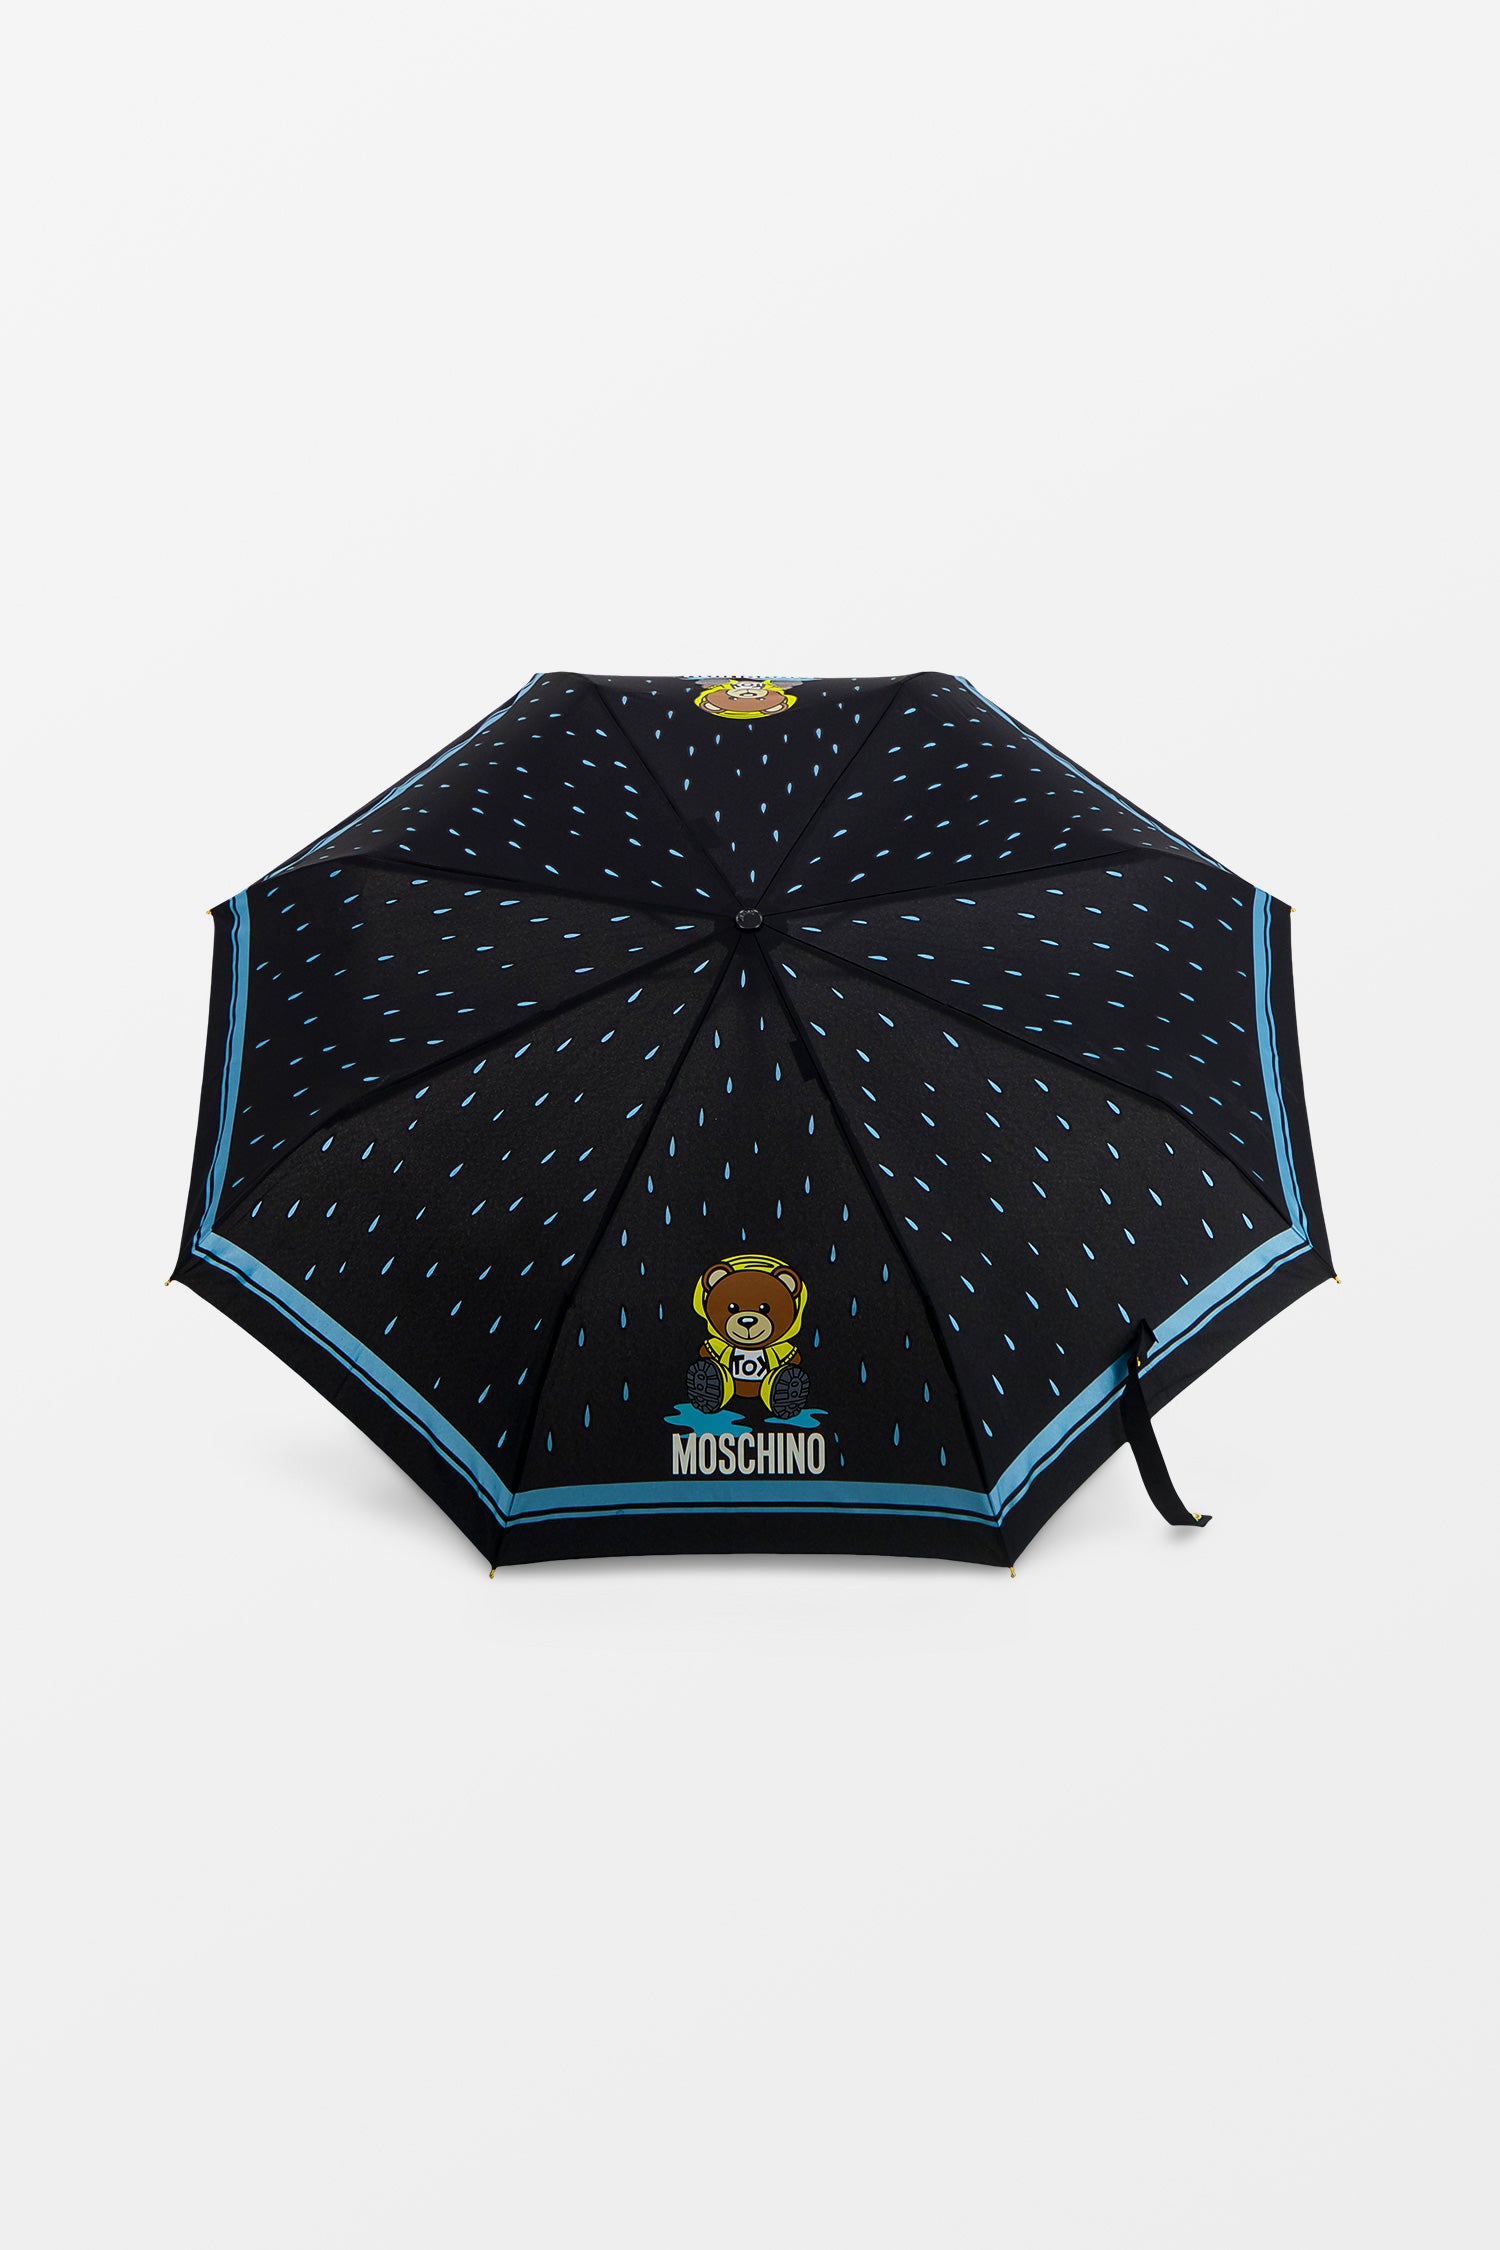 Moschino Bear in the rain Black Umbrella